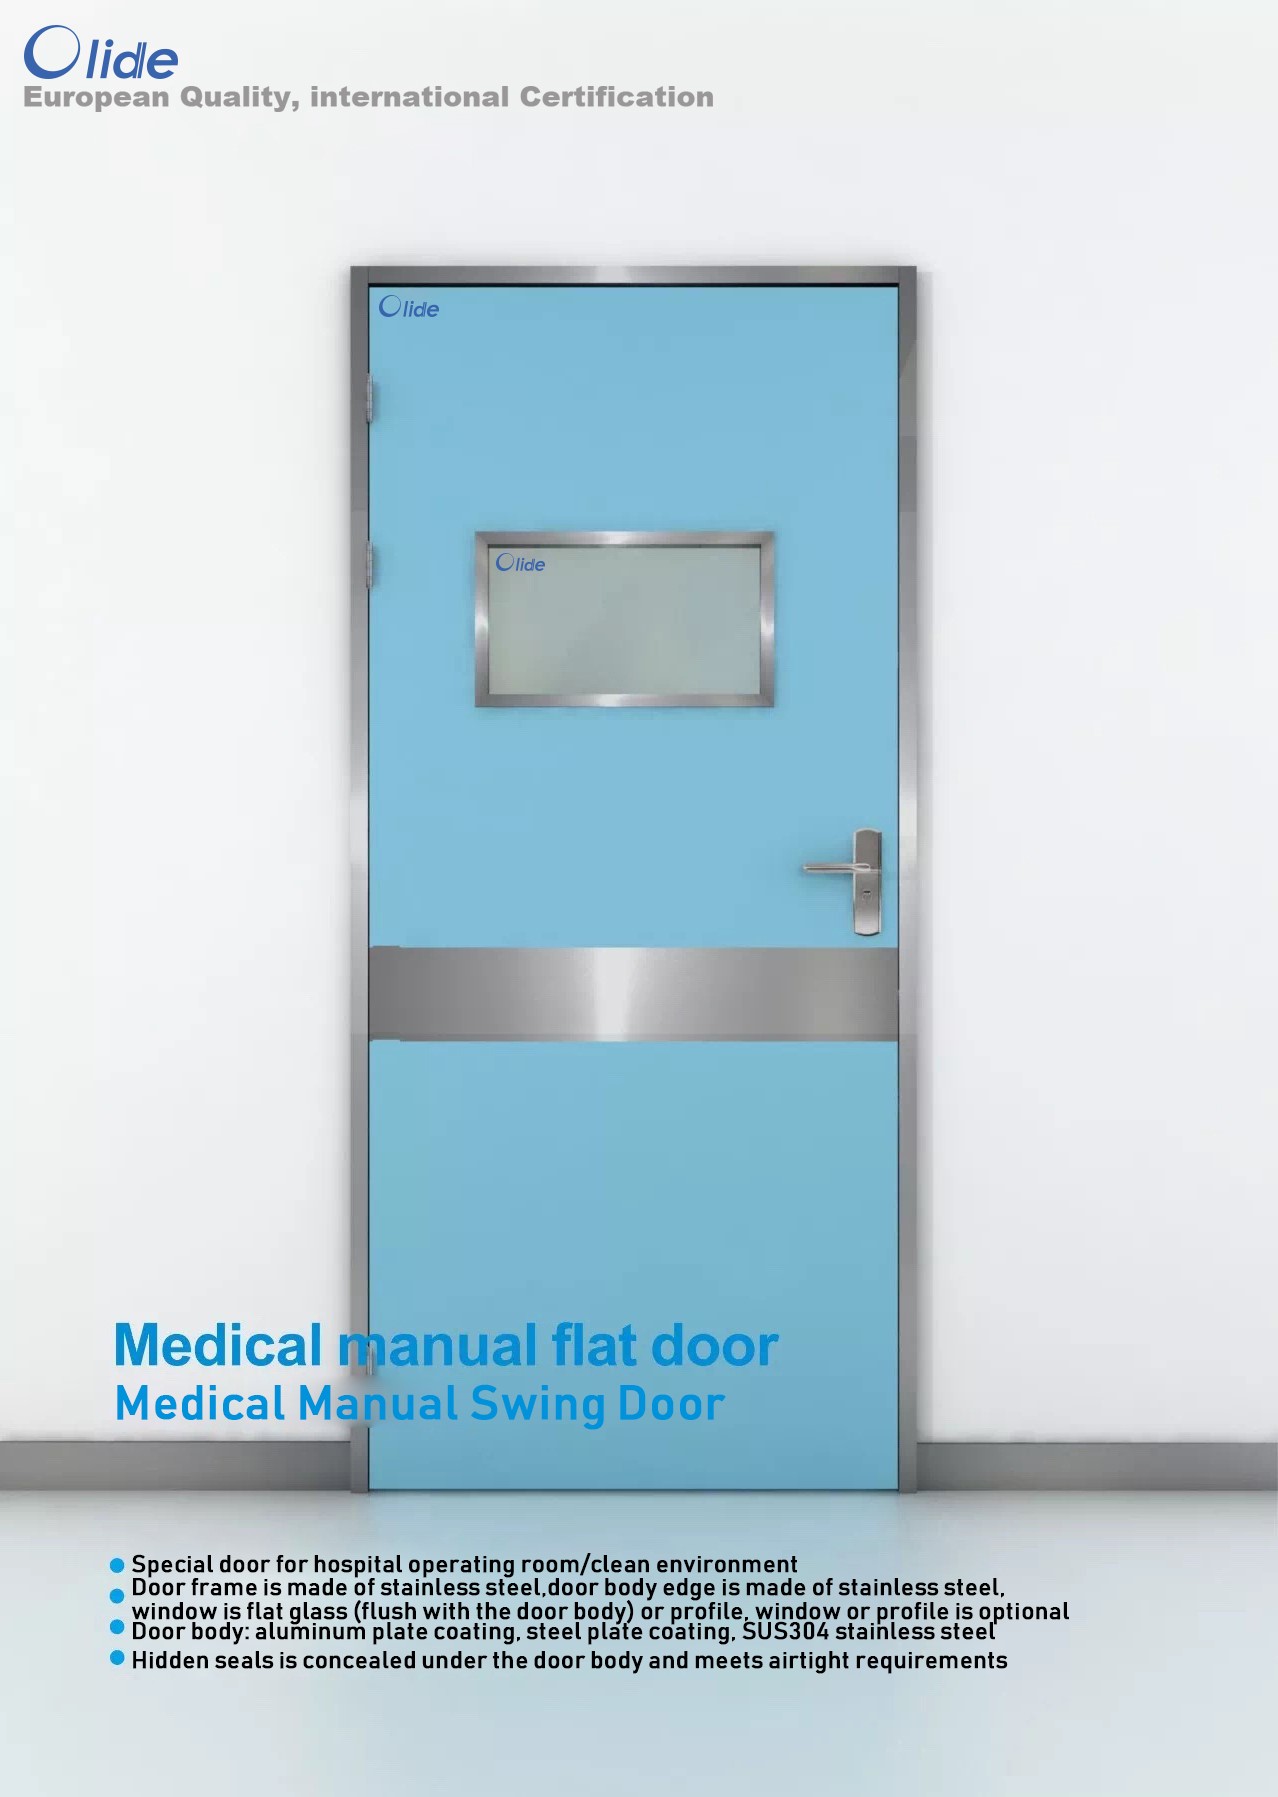 Medical Manual Flat Swing Door 1